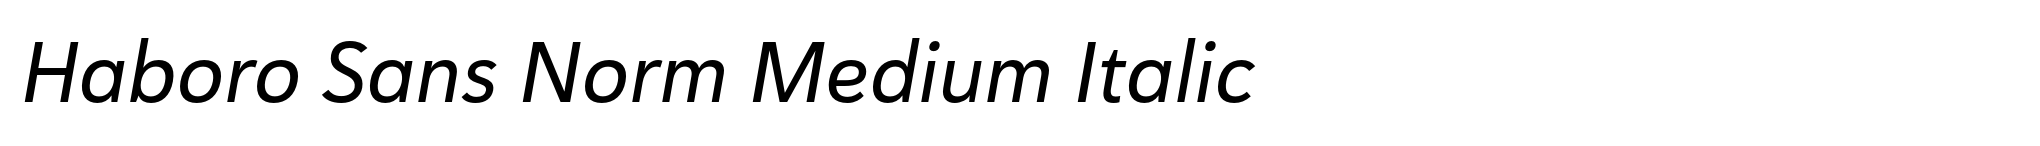 Haboro Sans Norm Medium Italic image